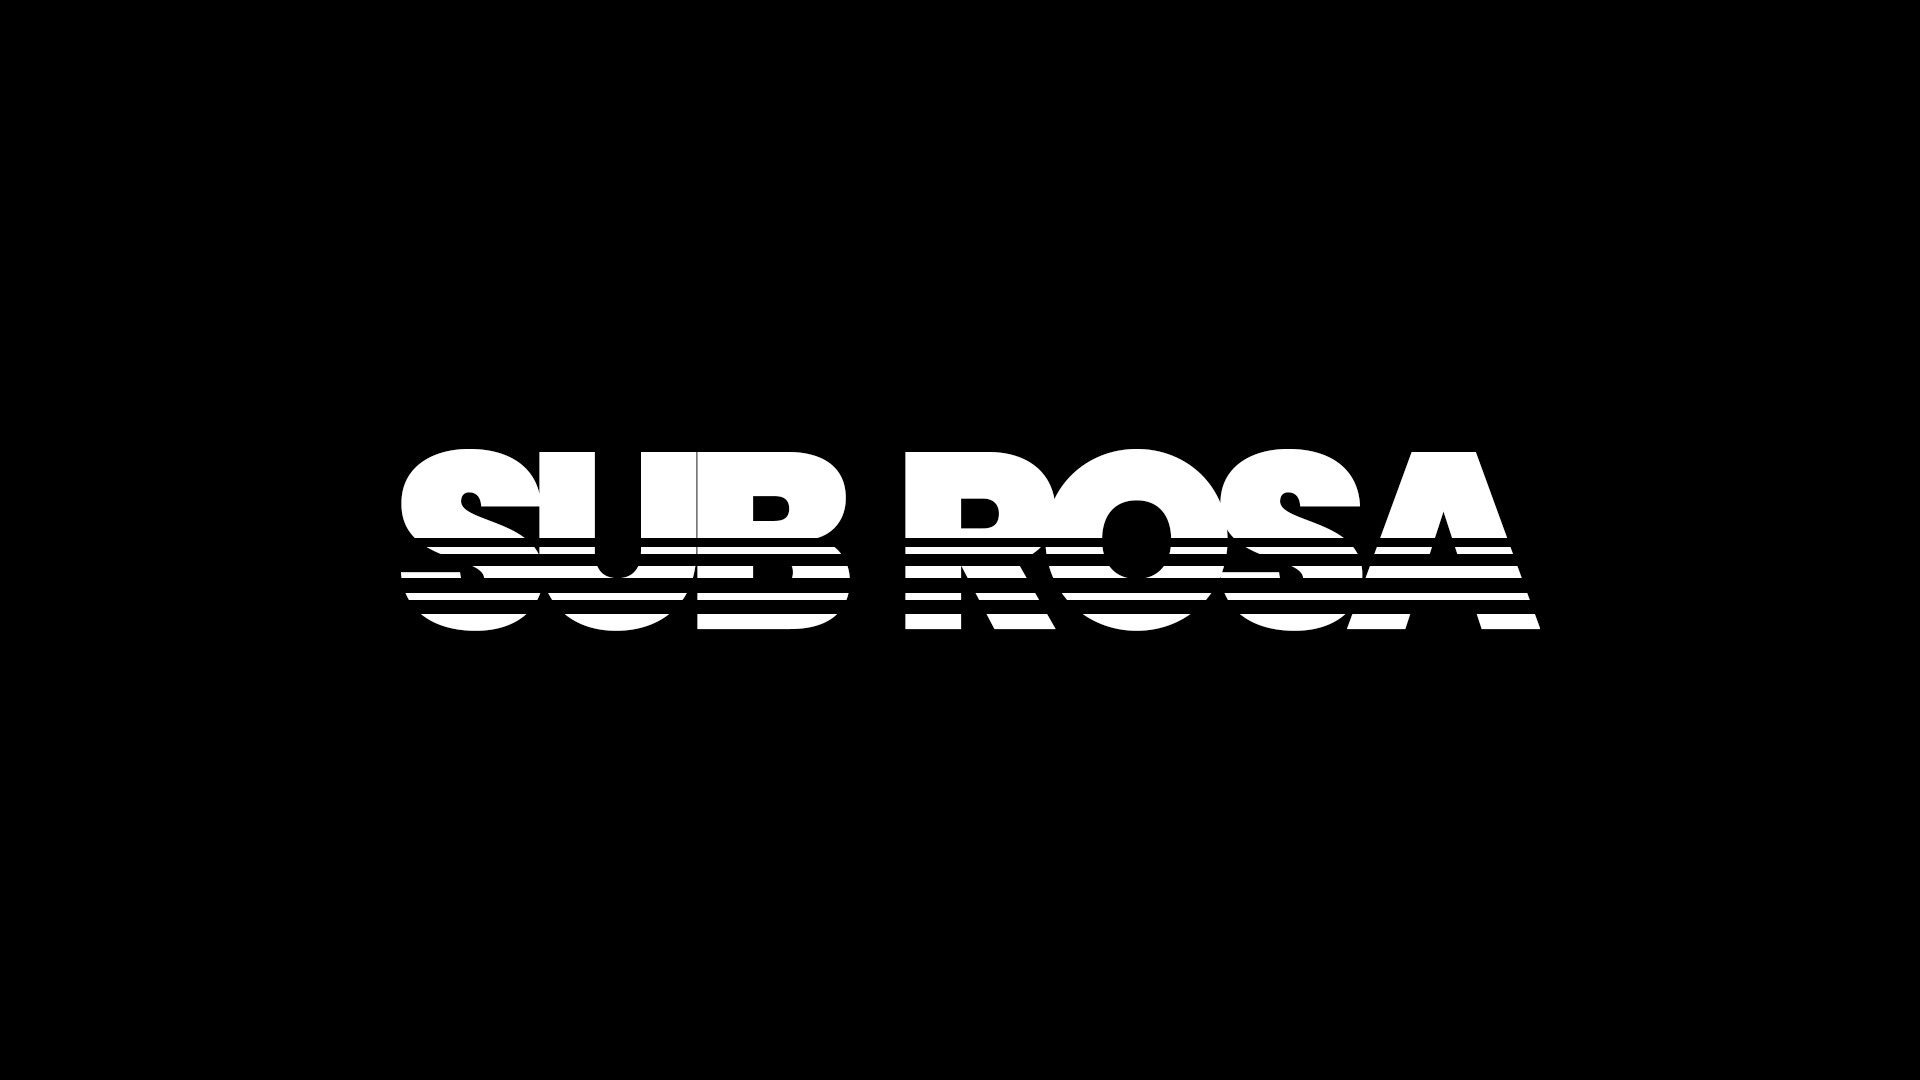 Subrosa Logo - Sub Rosa logo (1080p Resolution) (Font: Poppins Bold)